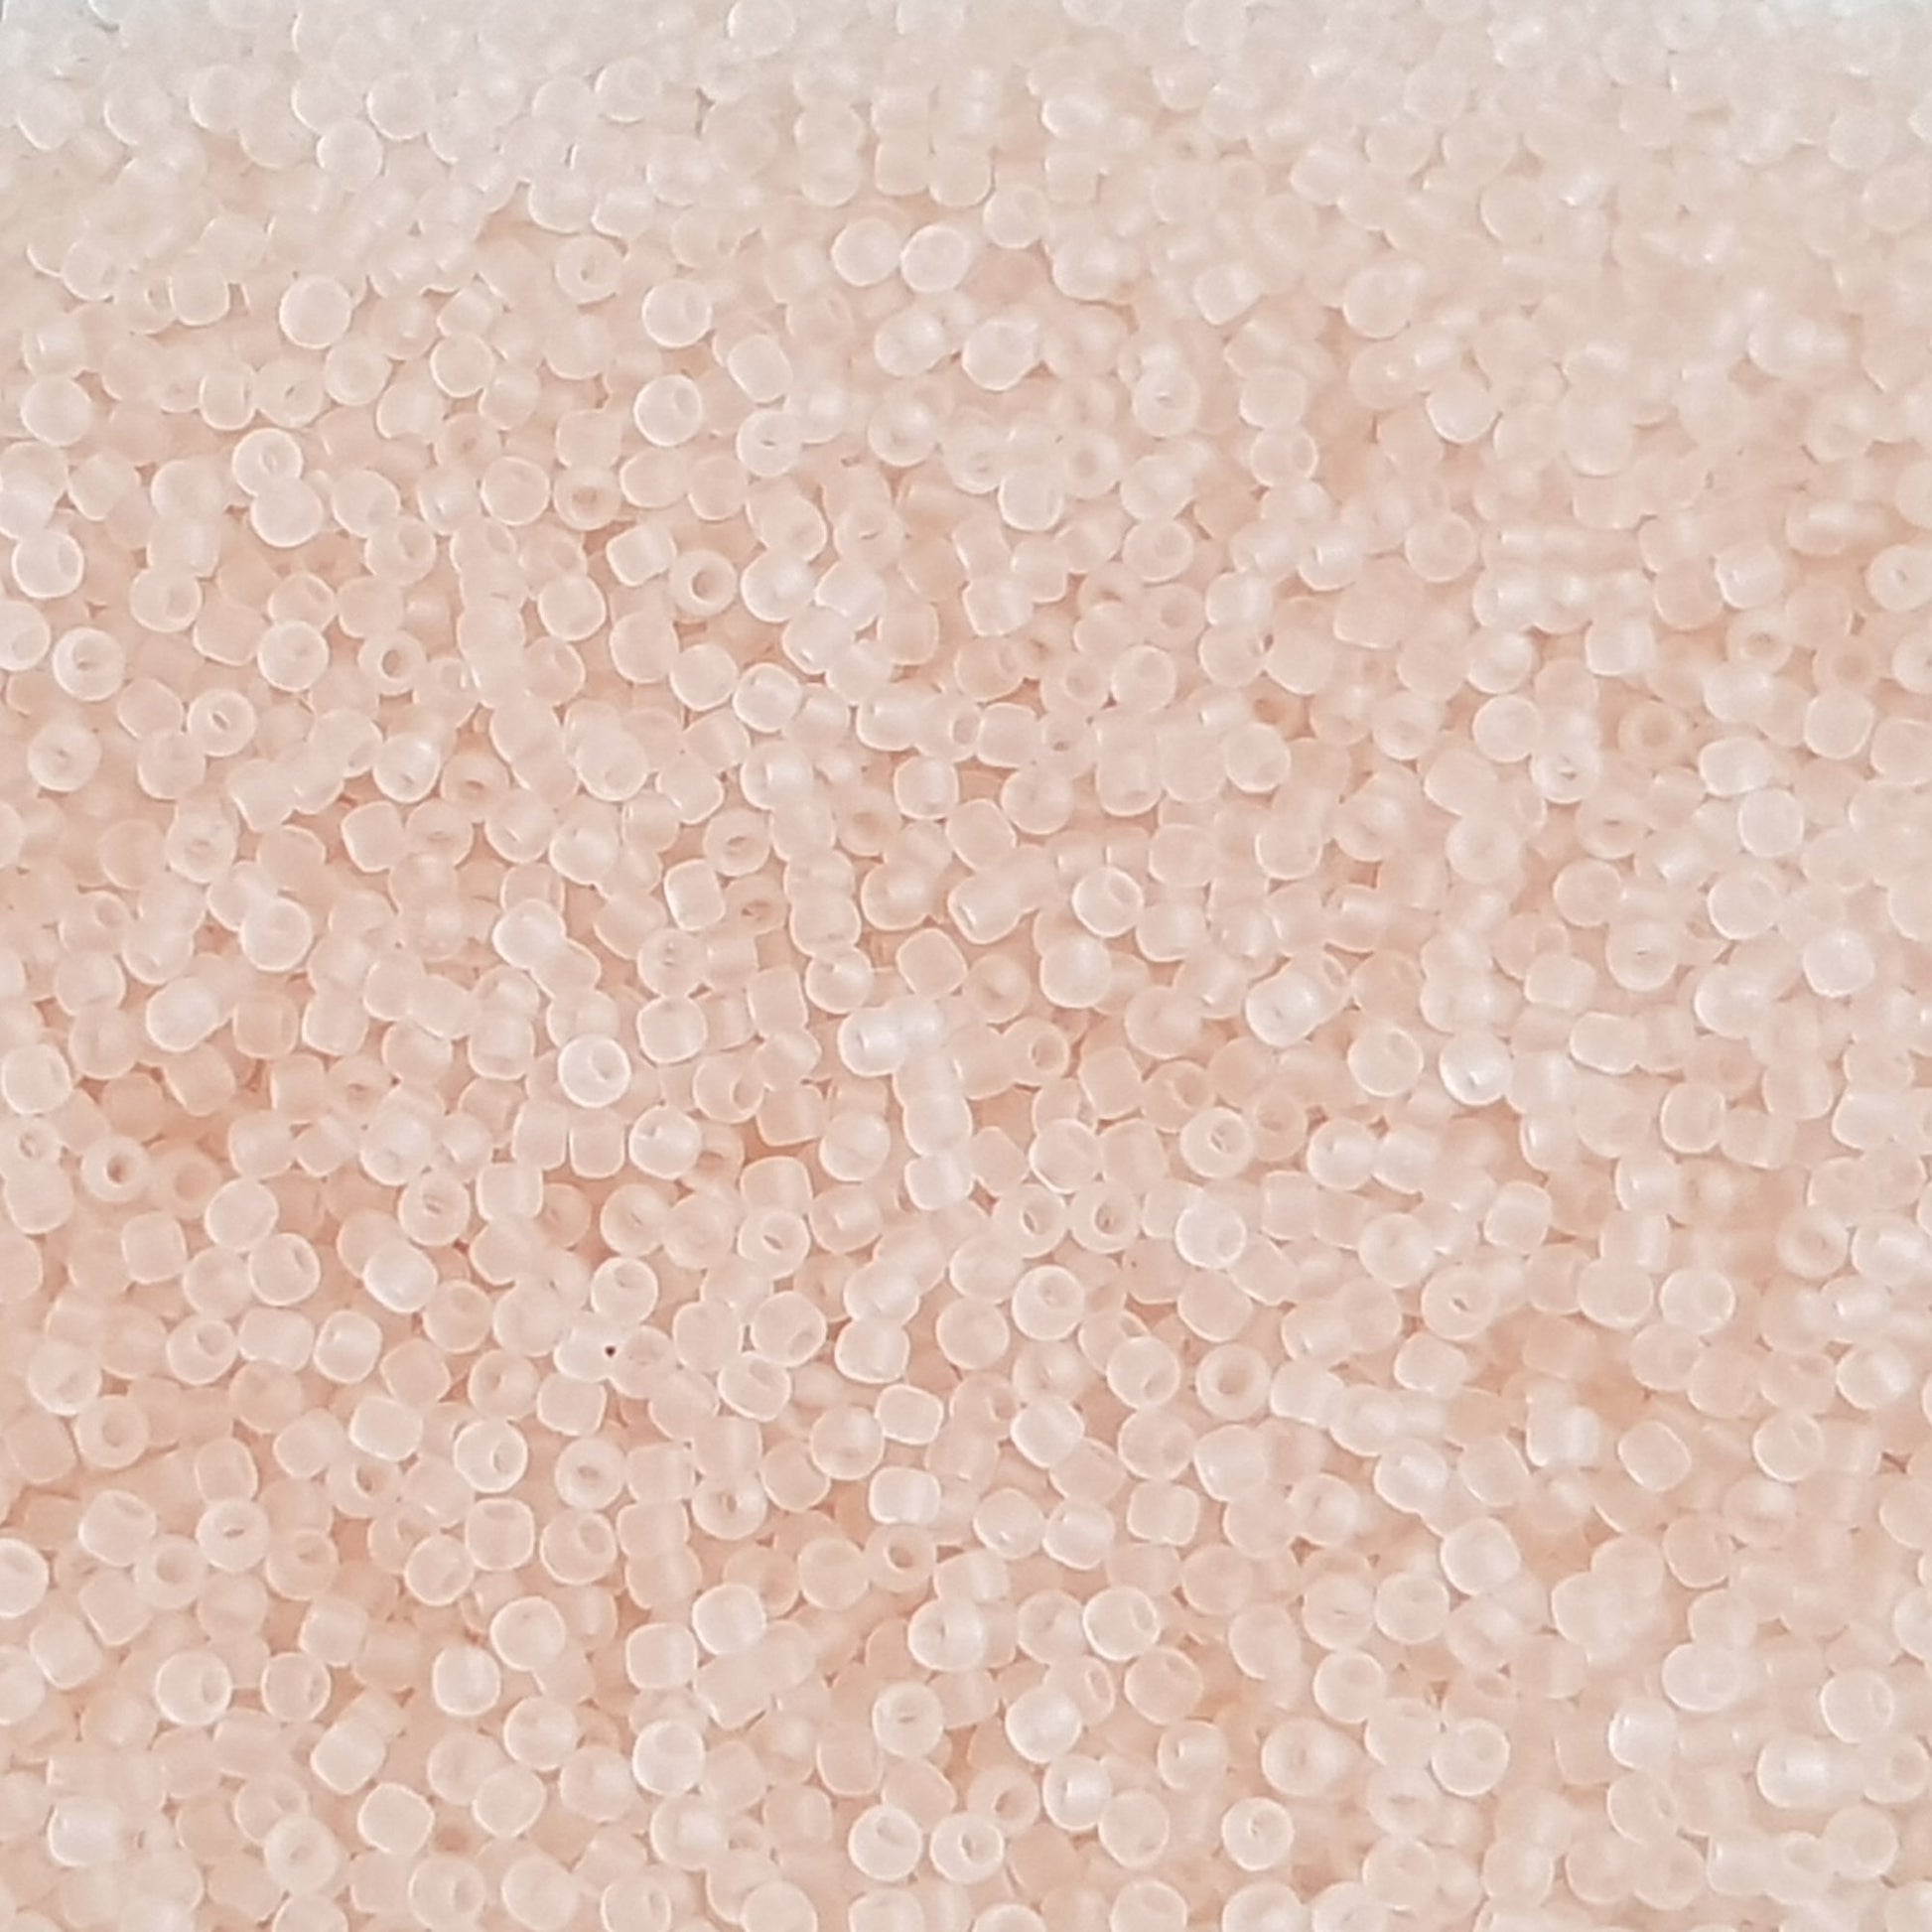 Pale pink transparent glass beads - Toho Seed Beads